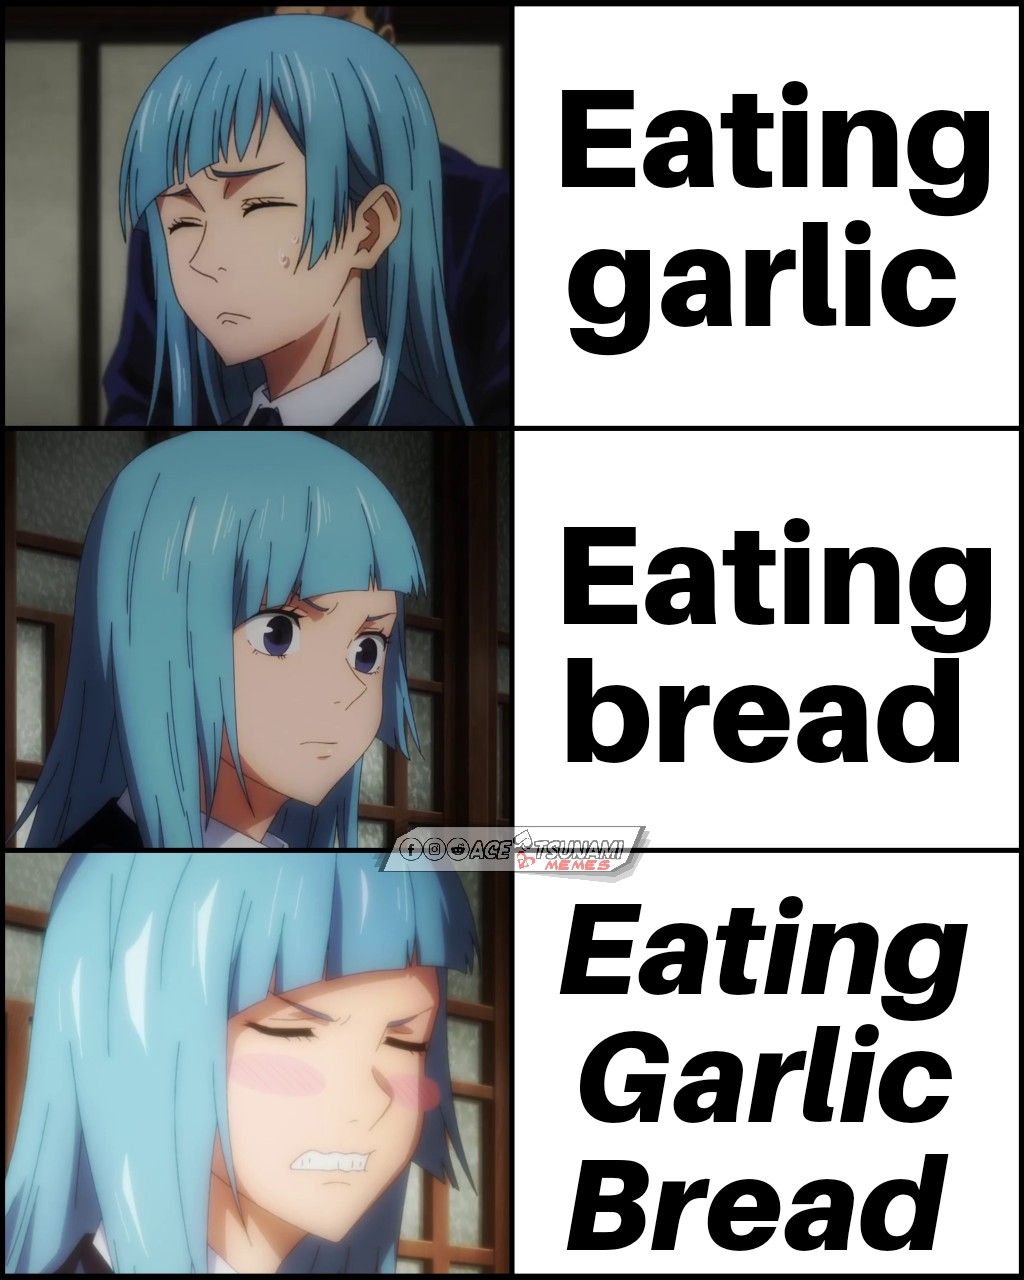 Suddenly craving for garlic bread